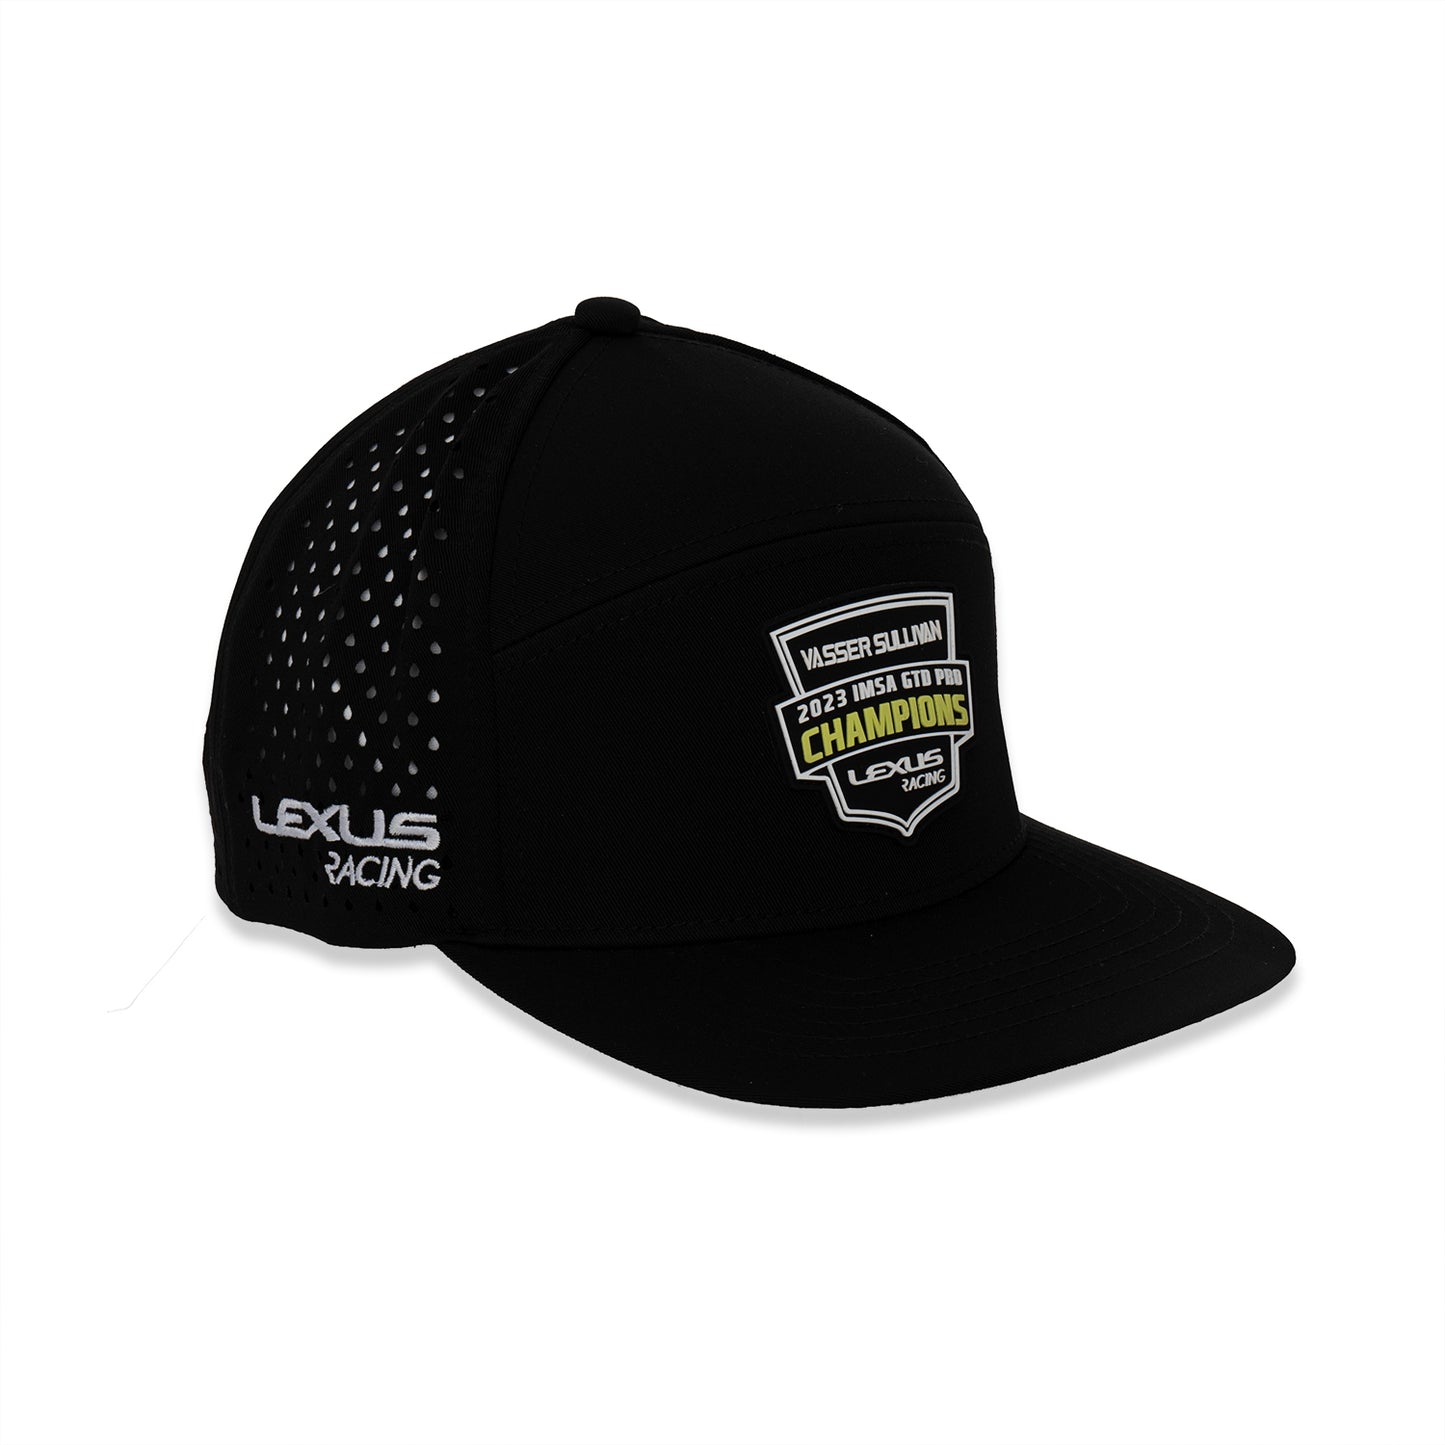 Vasser Sullivan 2023 GTD PRO Champions Hat - Black